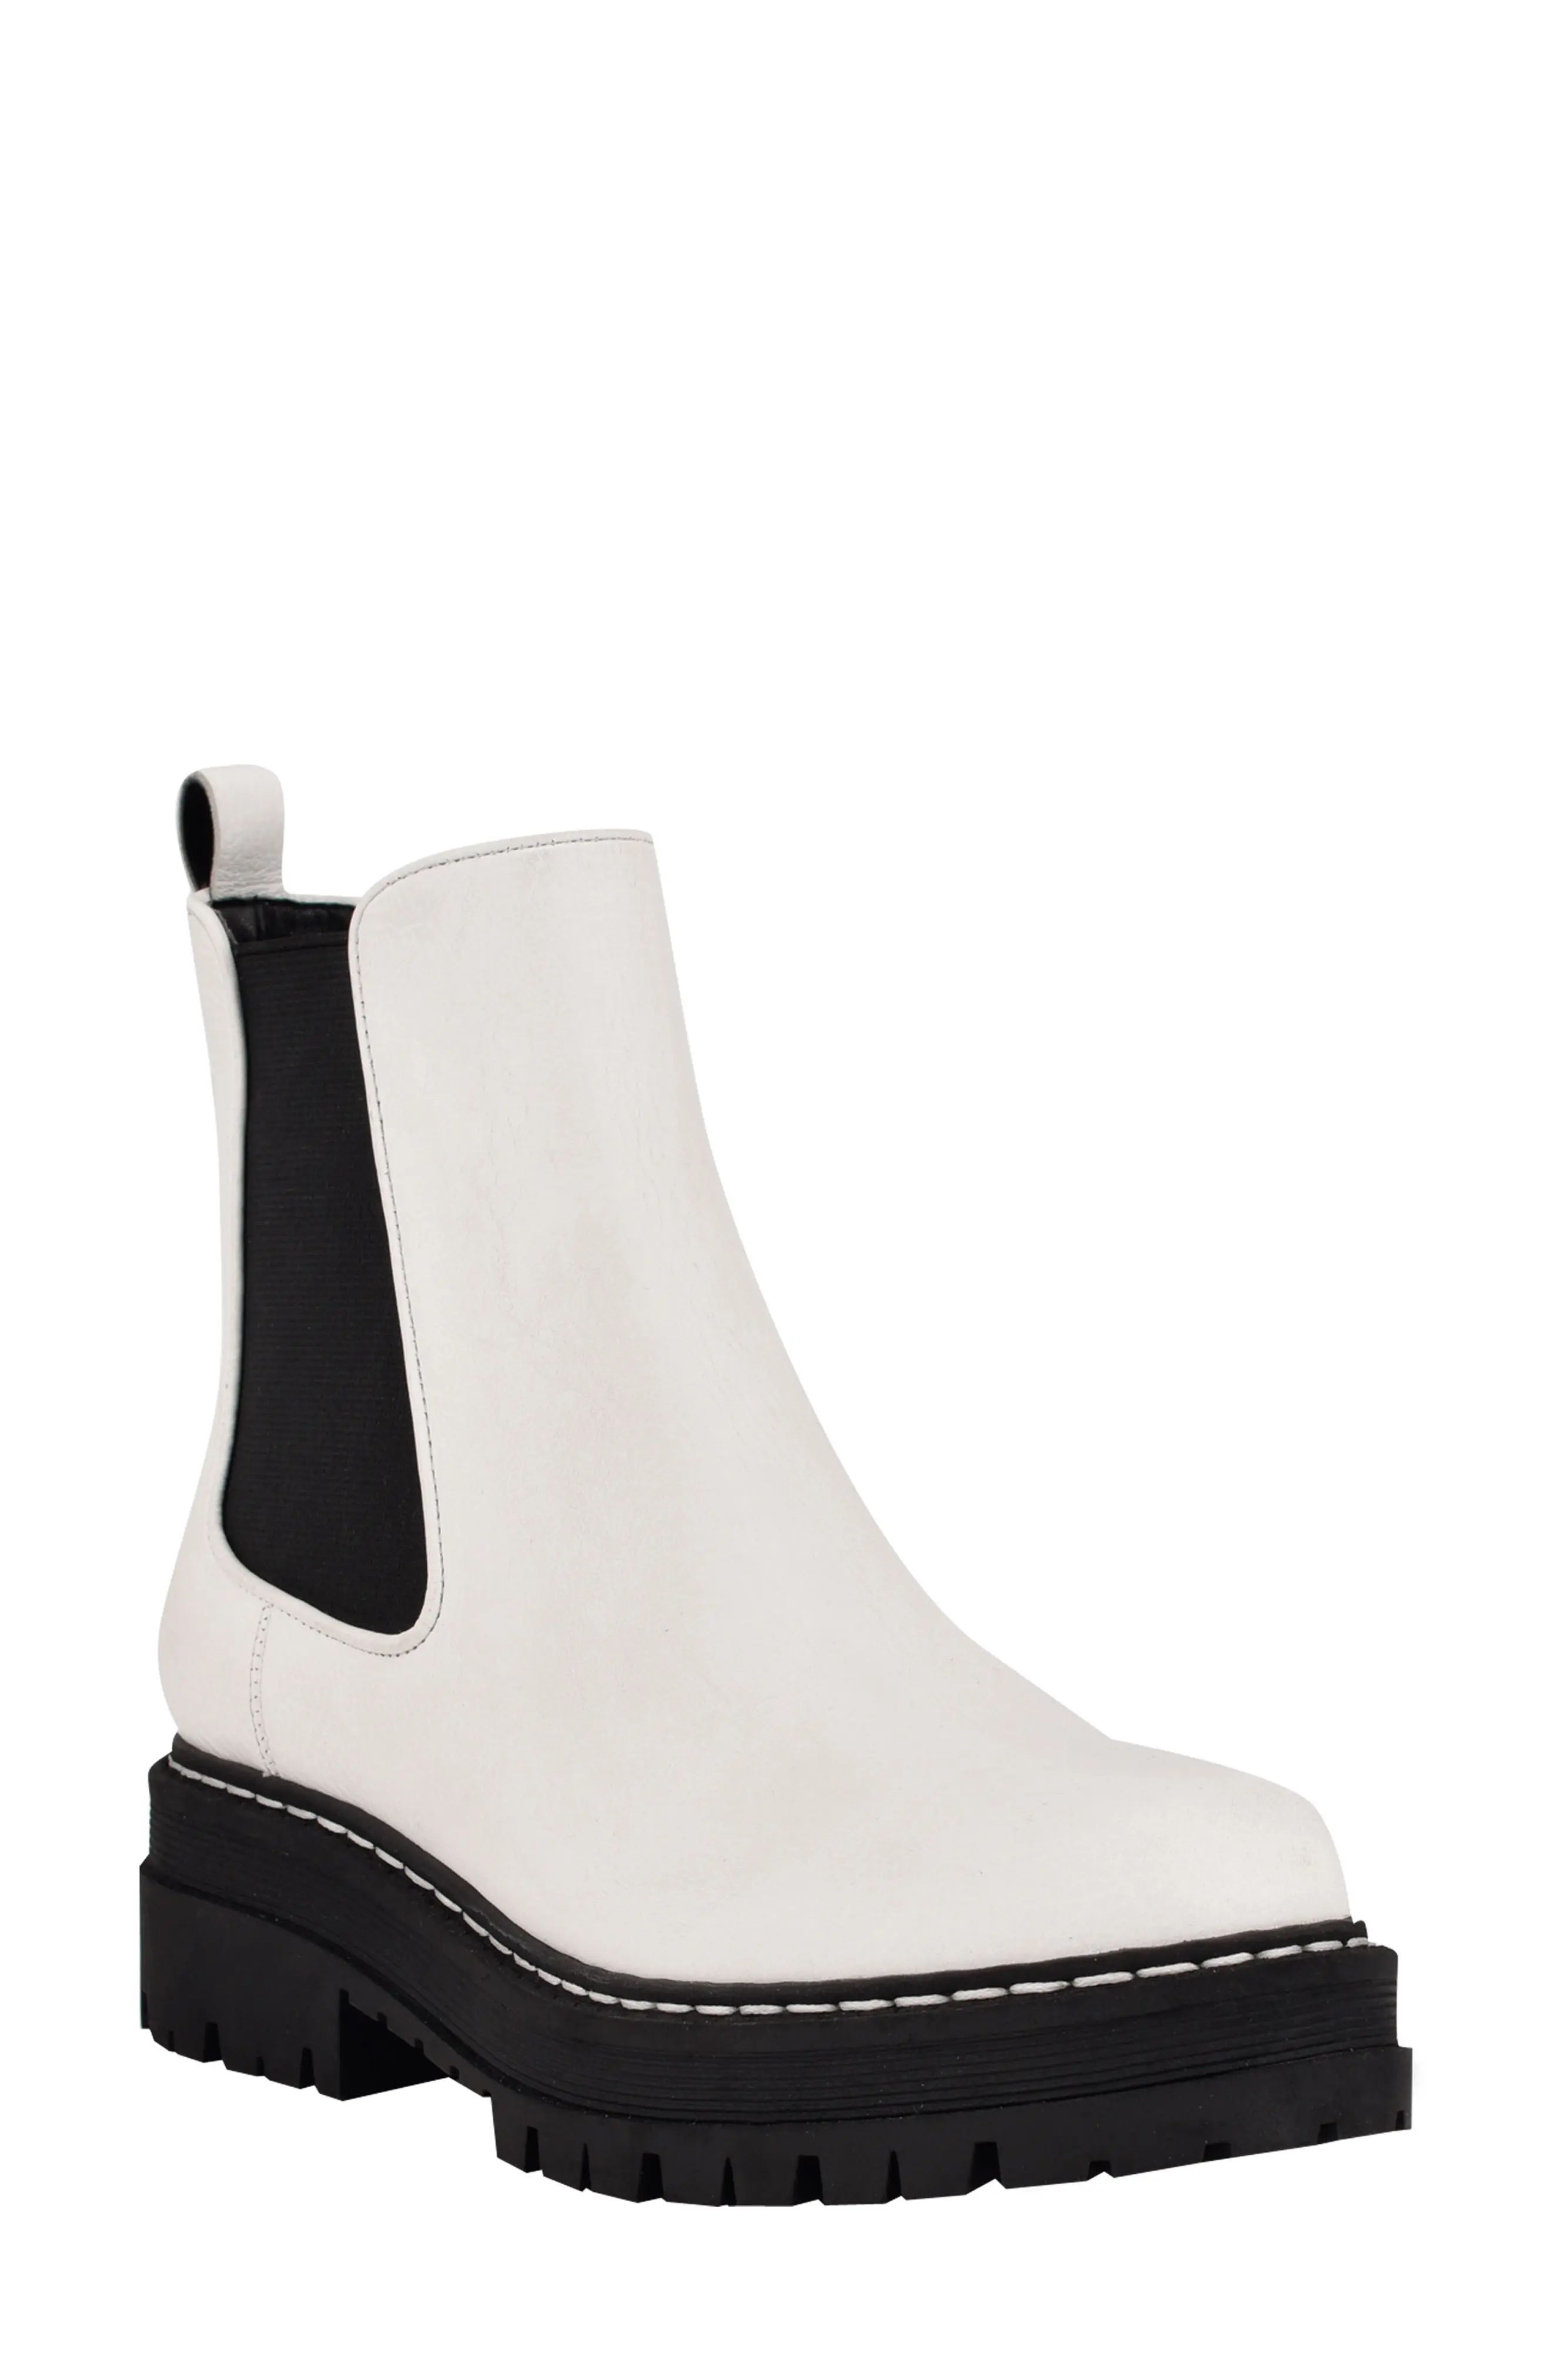 Marc Fisher LTD Privi Platform Chelsea Boot, Size 9 in White/Black Leather at Nordstrom | Nordstrom